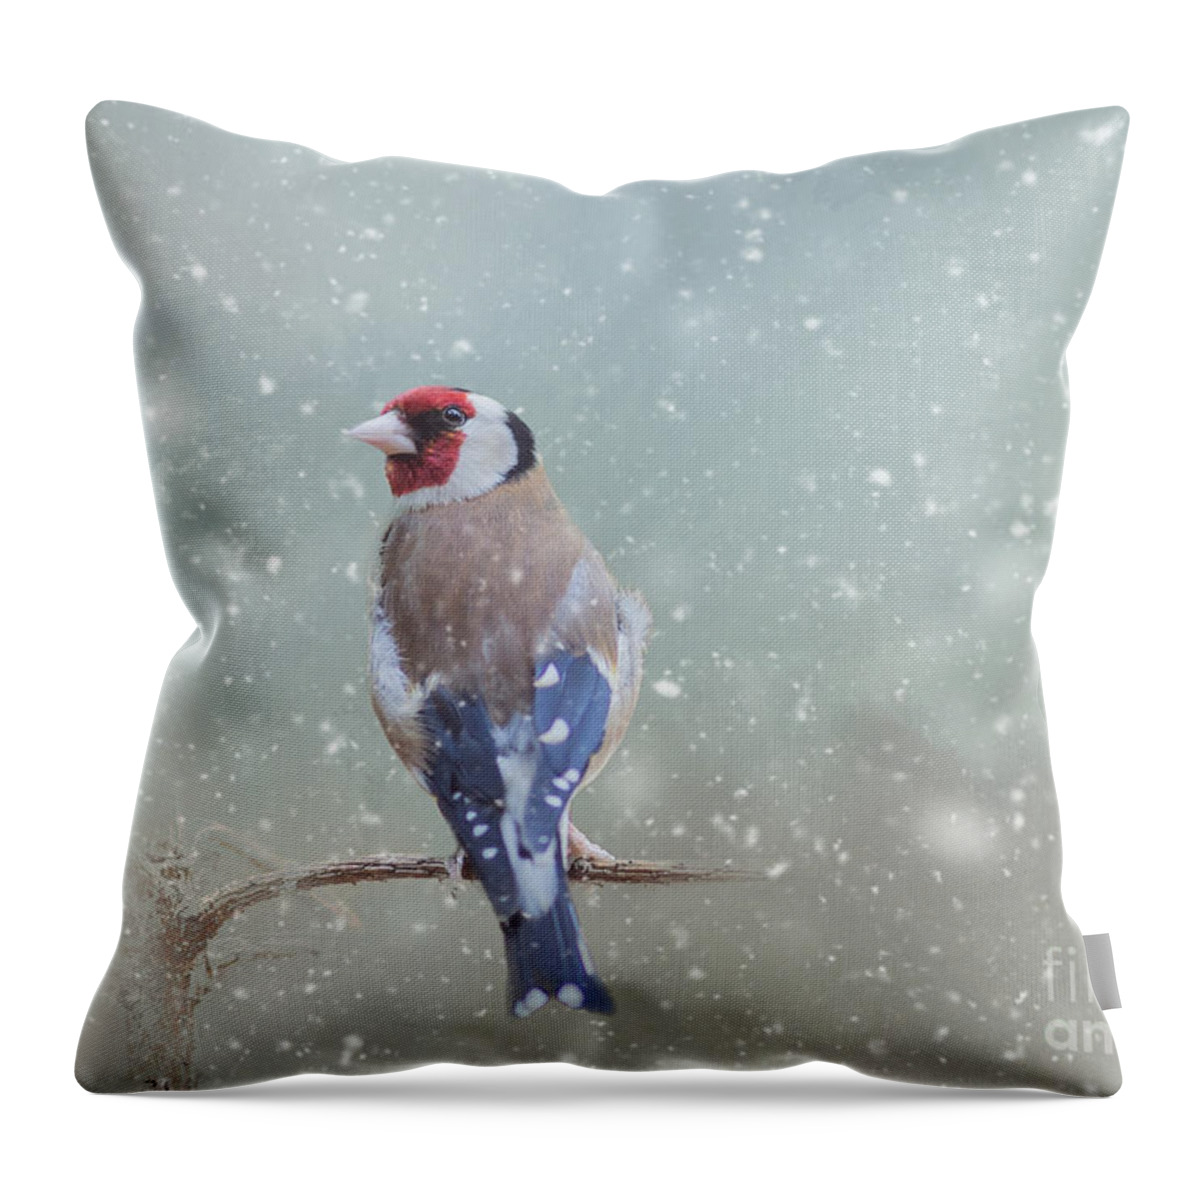 Winter Throw Pillow featuring the mixed media Winter Bird by Eva Lechner